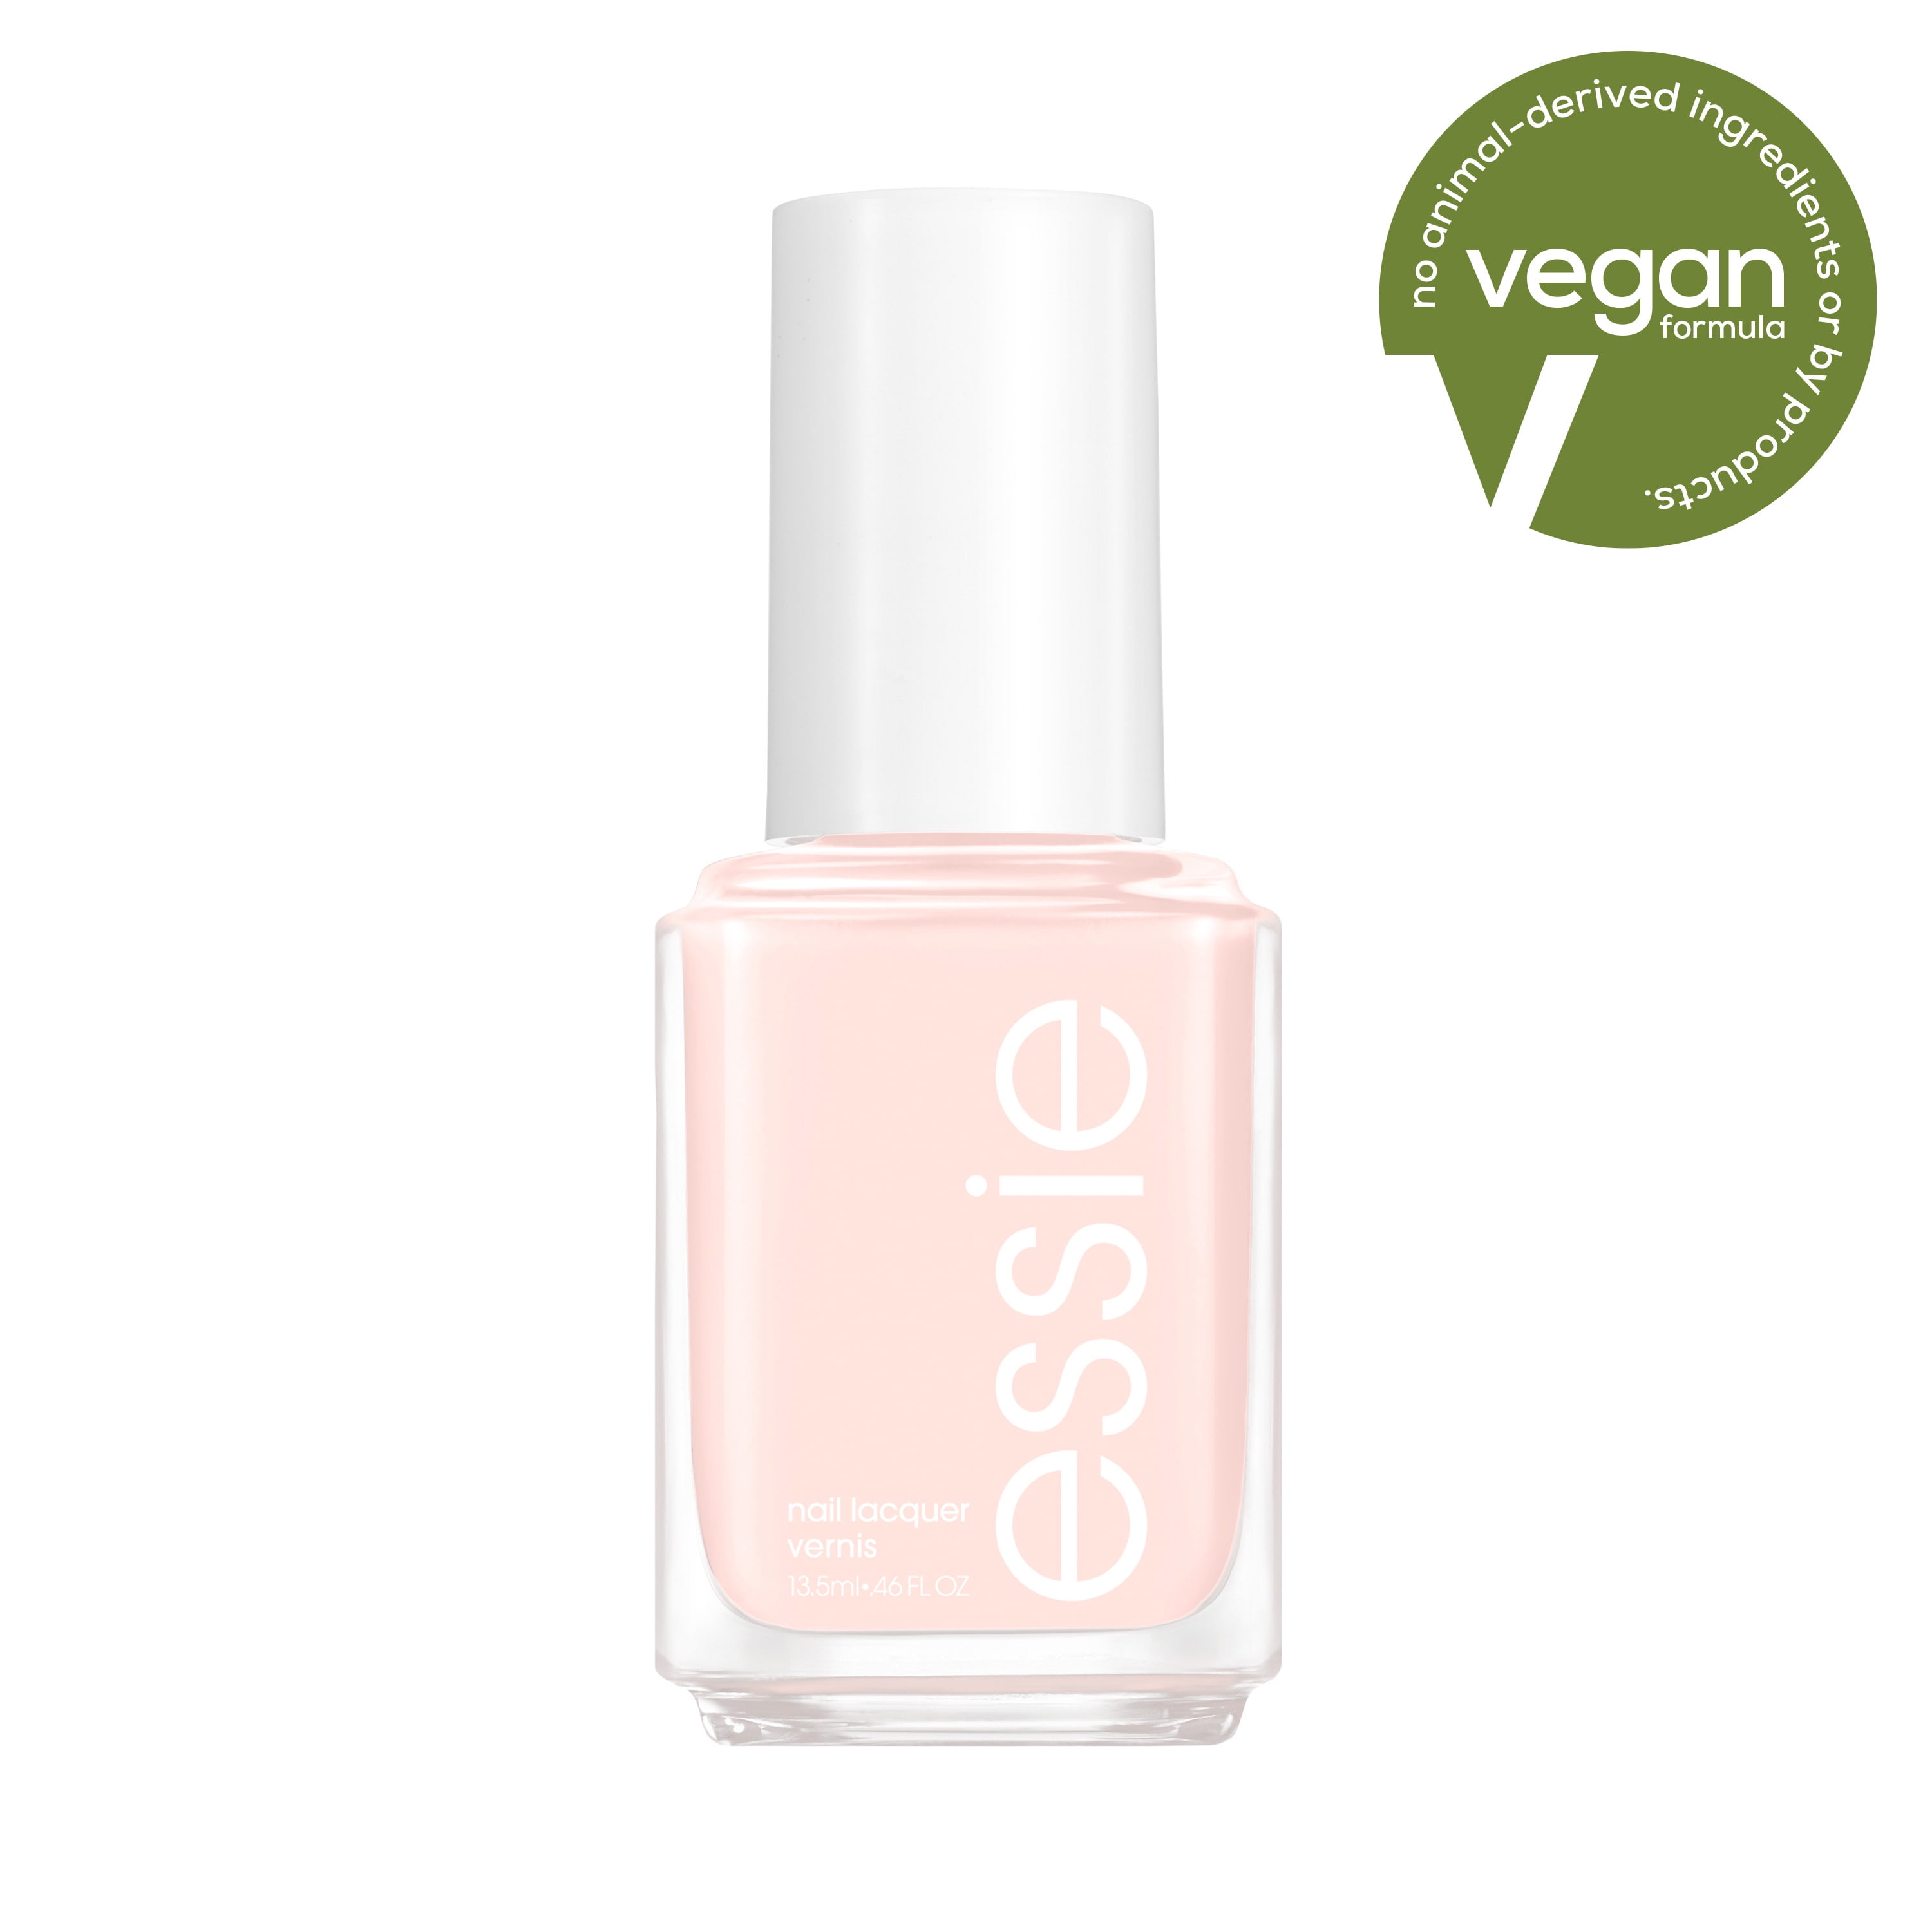 Kollektive Belyse Gods essie salon-quality nail polish, 8-free vegan, sheer pale pink, Ballet  Slippers, 0.46 fl oz - Walmart.com